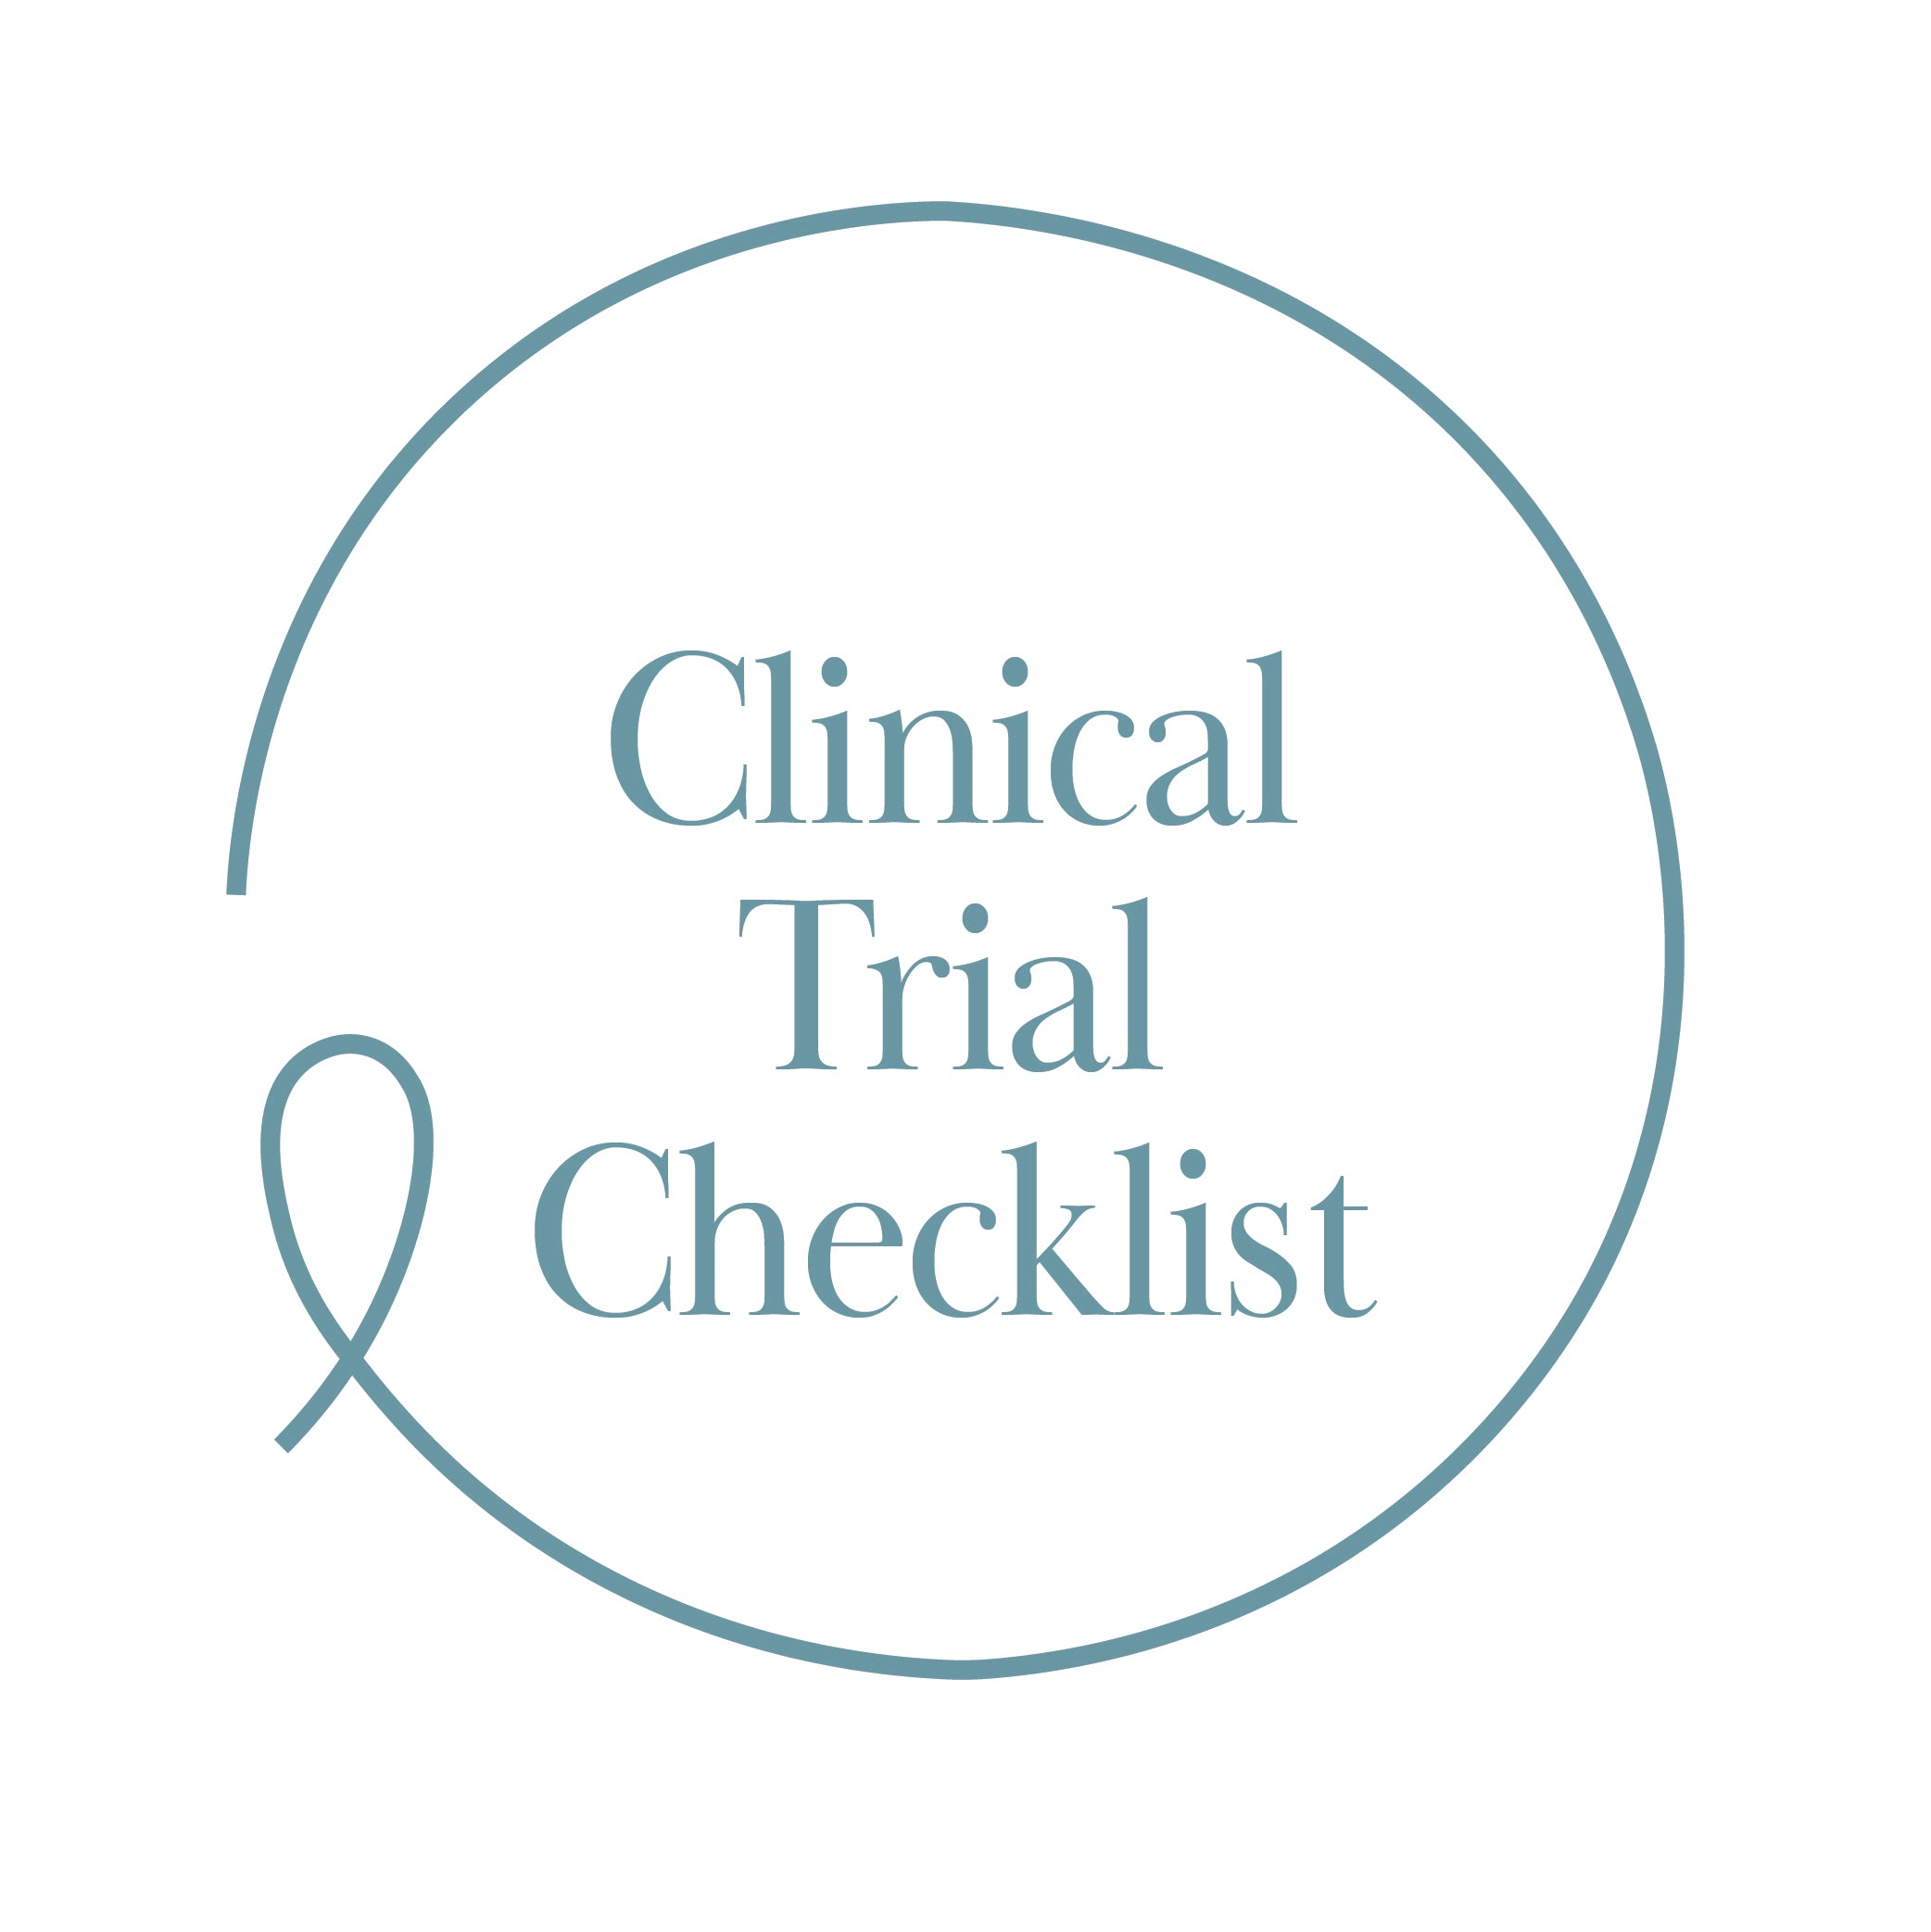 Clinical Trial Checklist